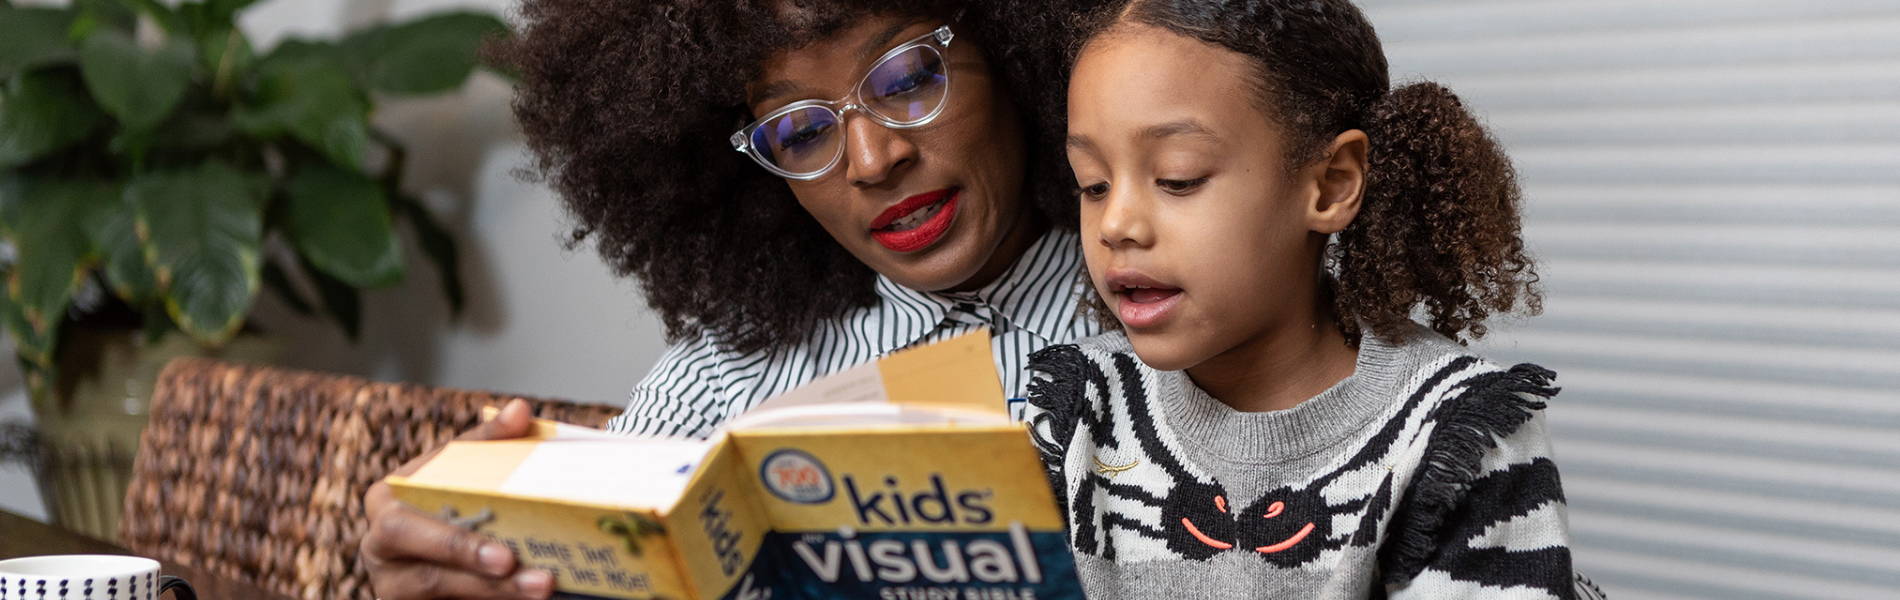 Mother & Daughter Reading Kids Visual Bible